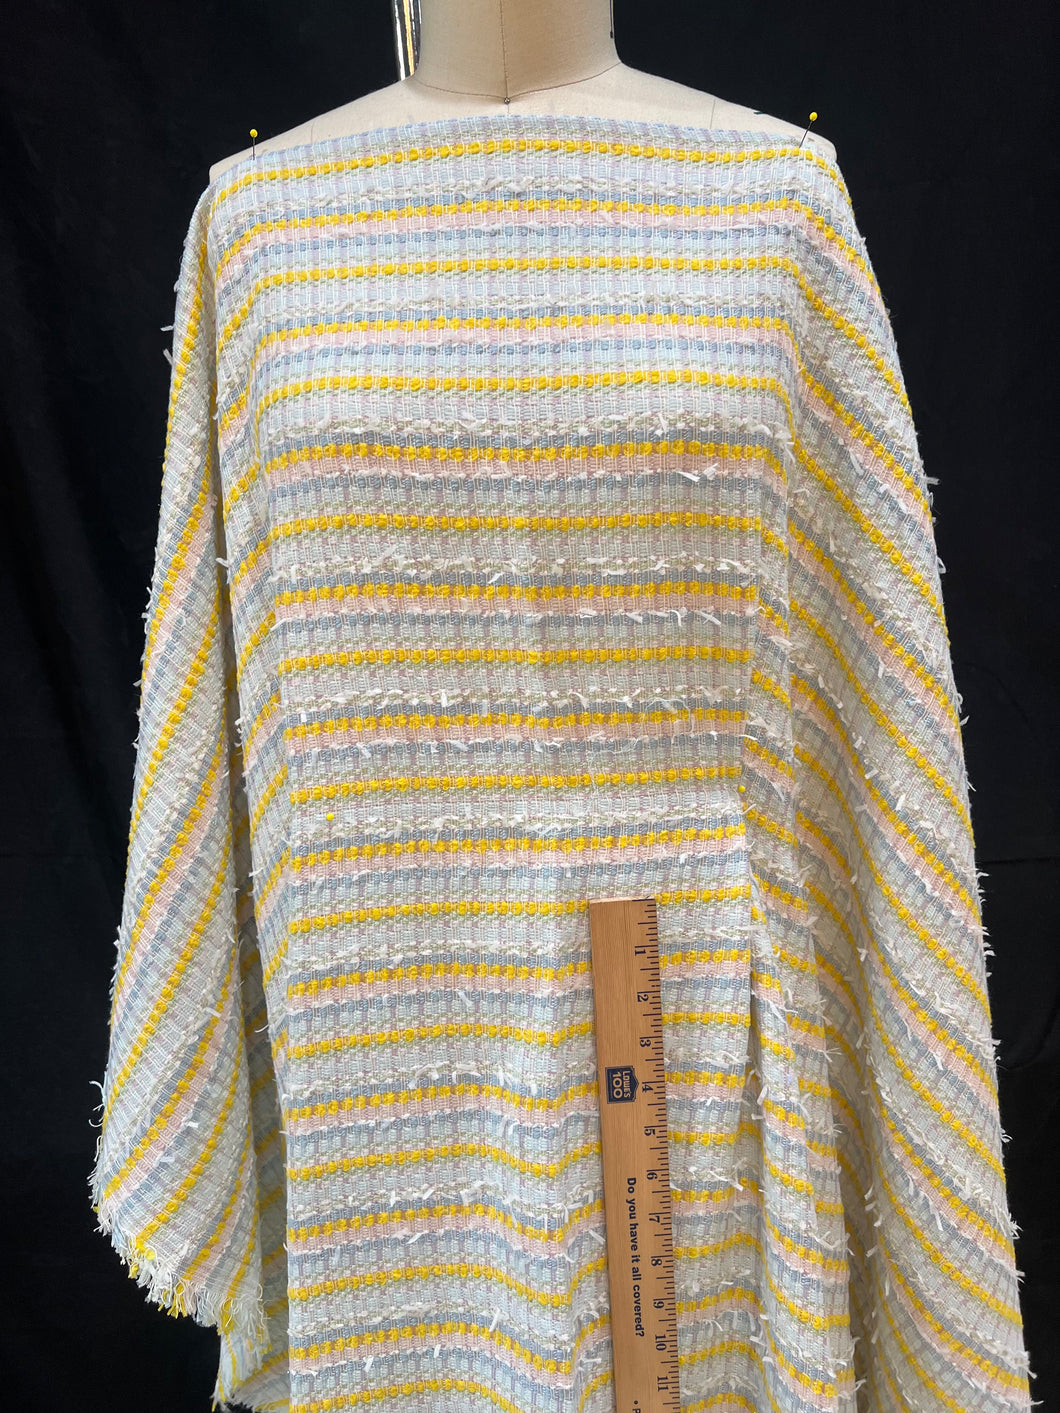 Linton Tweeds - Yellow, Multi Striped Boucle